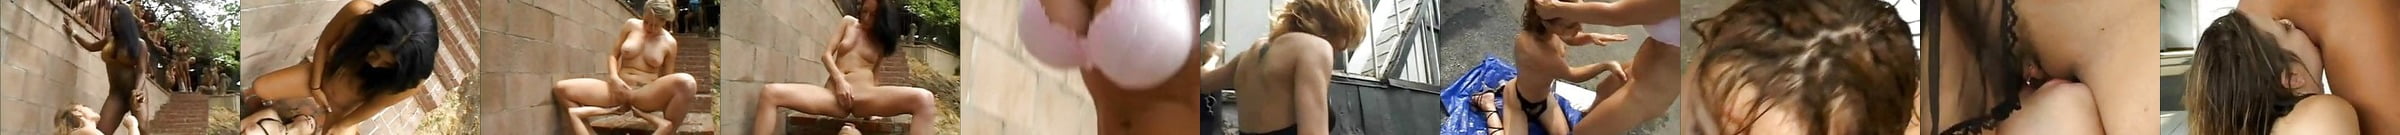 Huge Lesbian Squirting Orgy Free Tube8 Lesbian Porn Video Xhamster